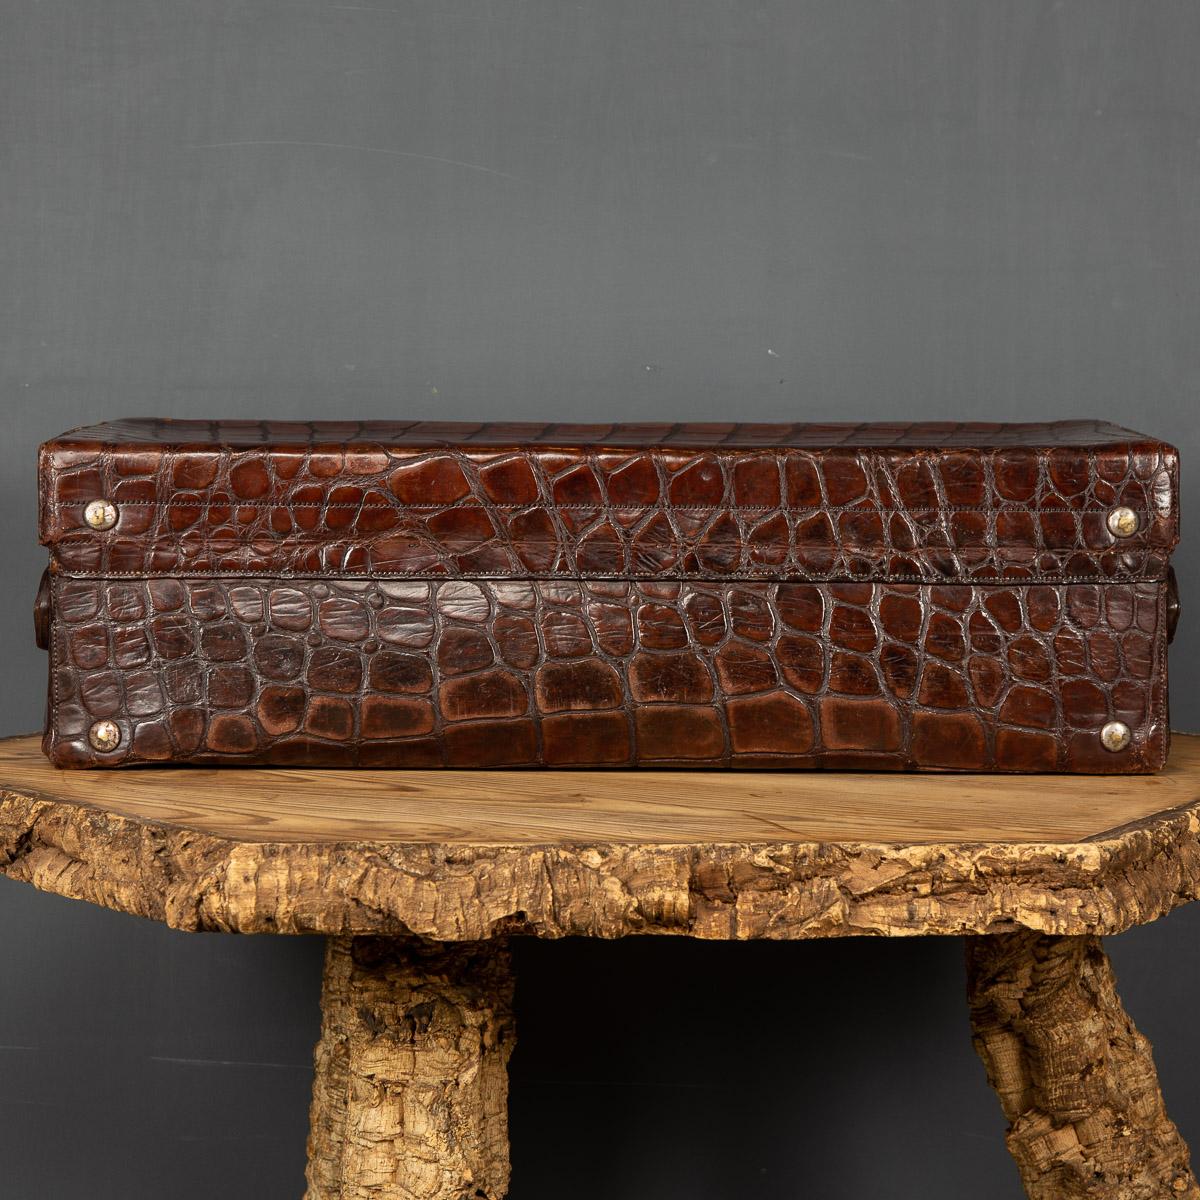 British 20th Century English Crocodile Leather Suitcase, c.1900